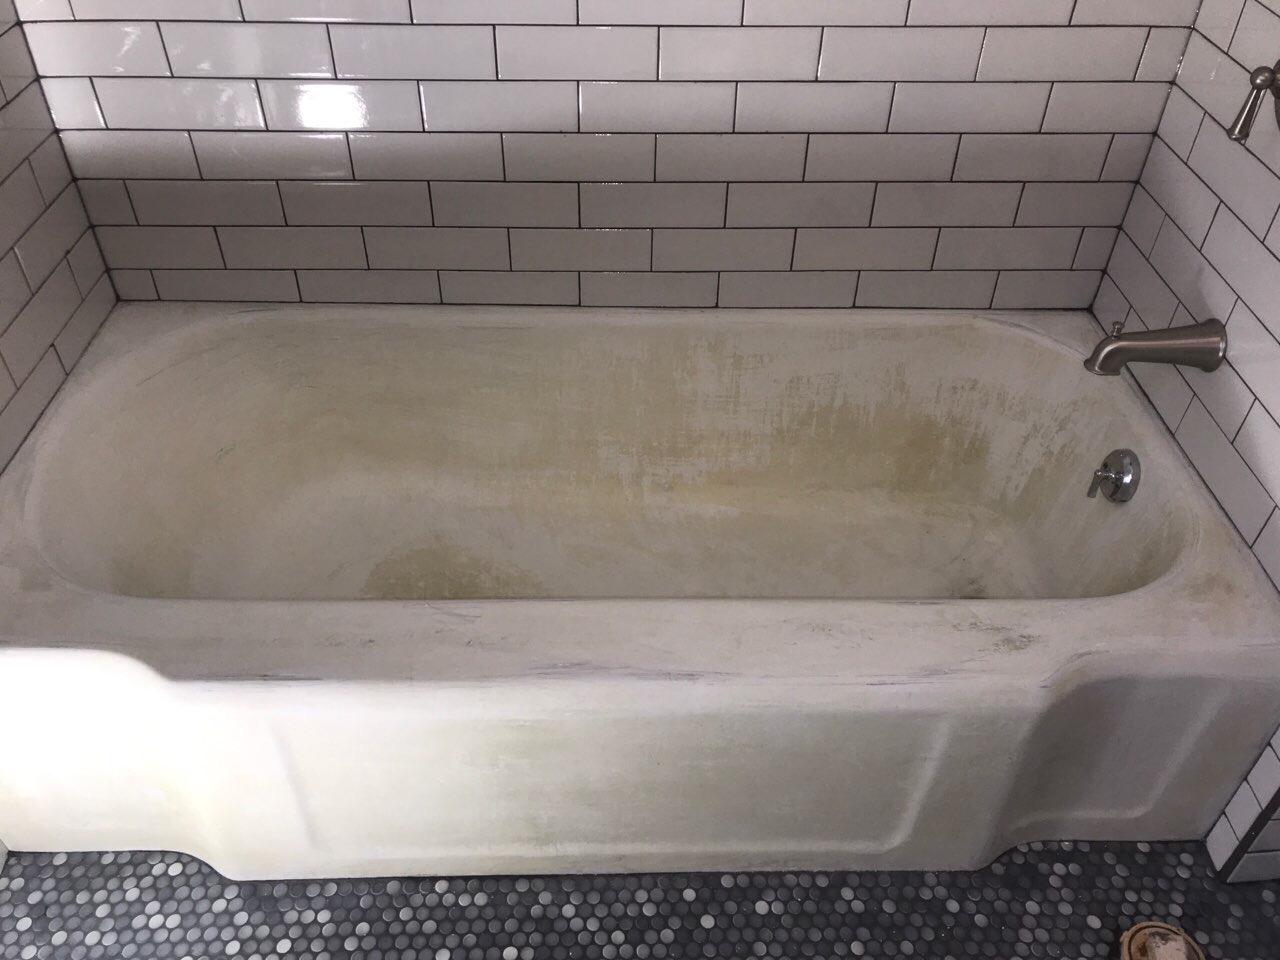 Bathtub Refinishing Reglazing, Bathtubs And Sinks Refinishing Inc